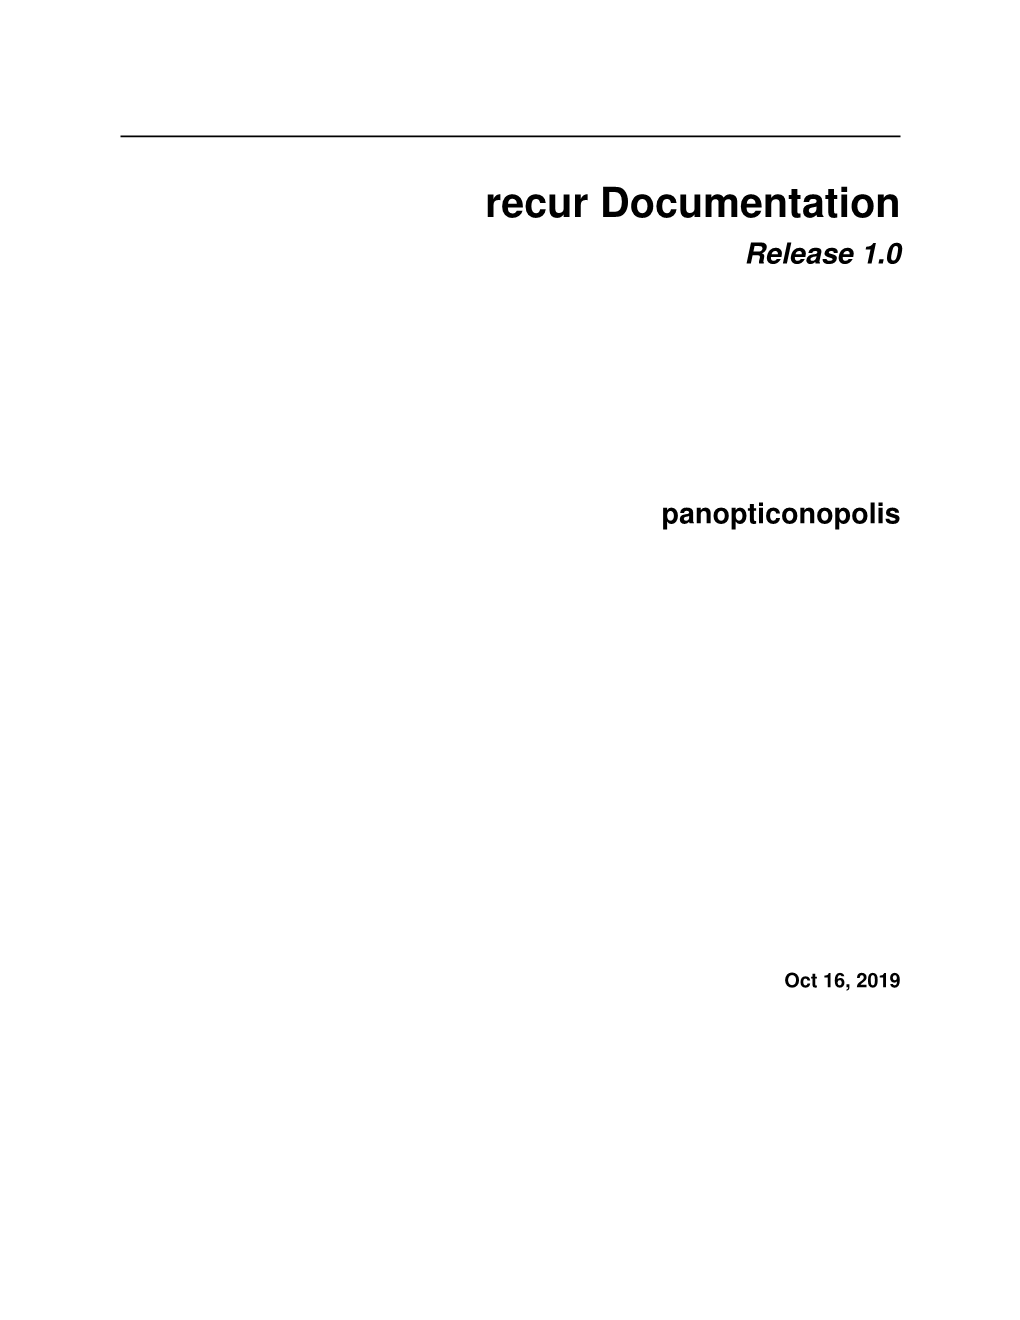 Recur Documentation Release 1.0